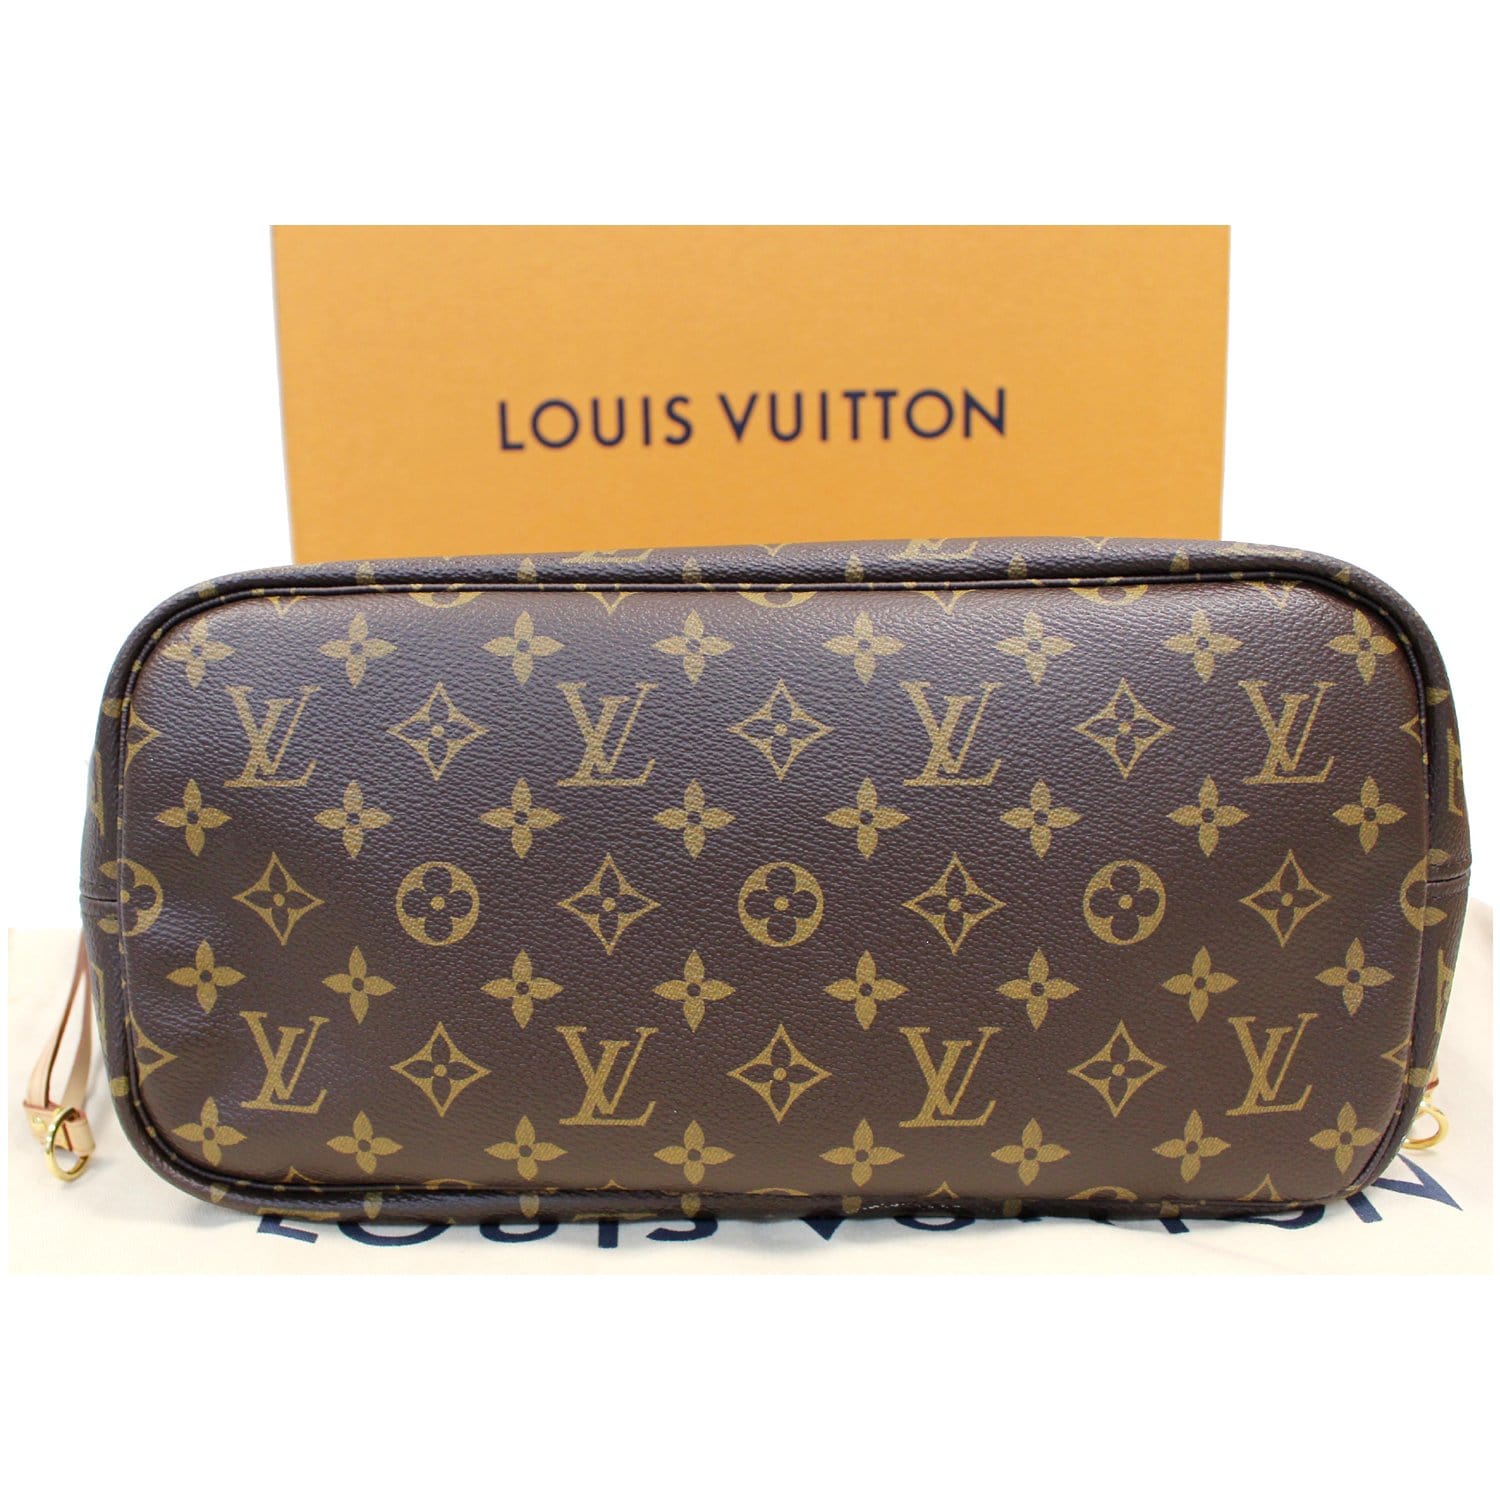 Louis Vuitton Stories Neverfull MM Monogram Canvas Bag